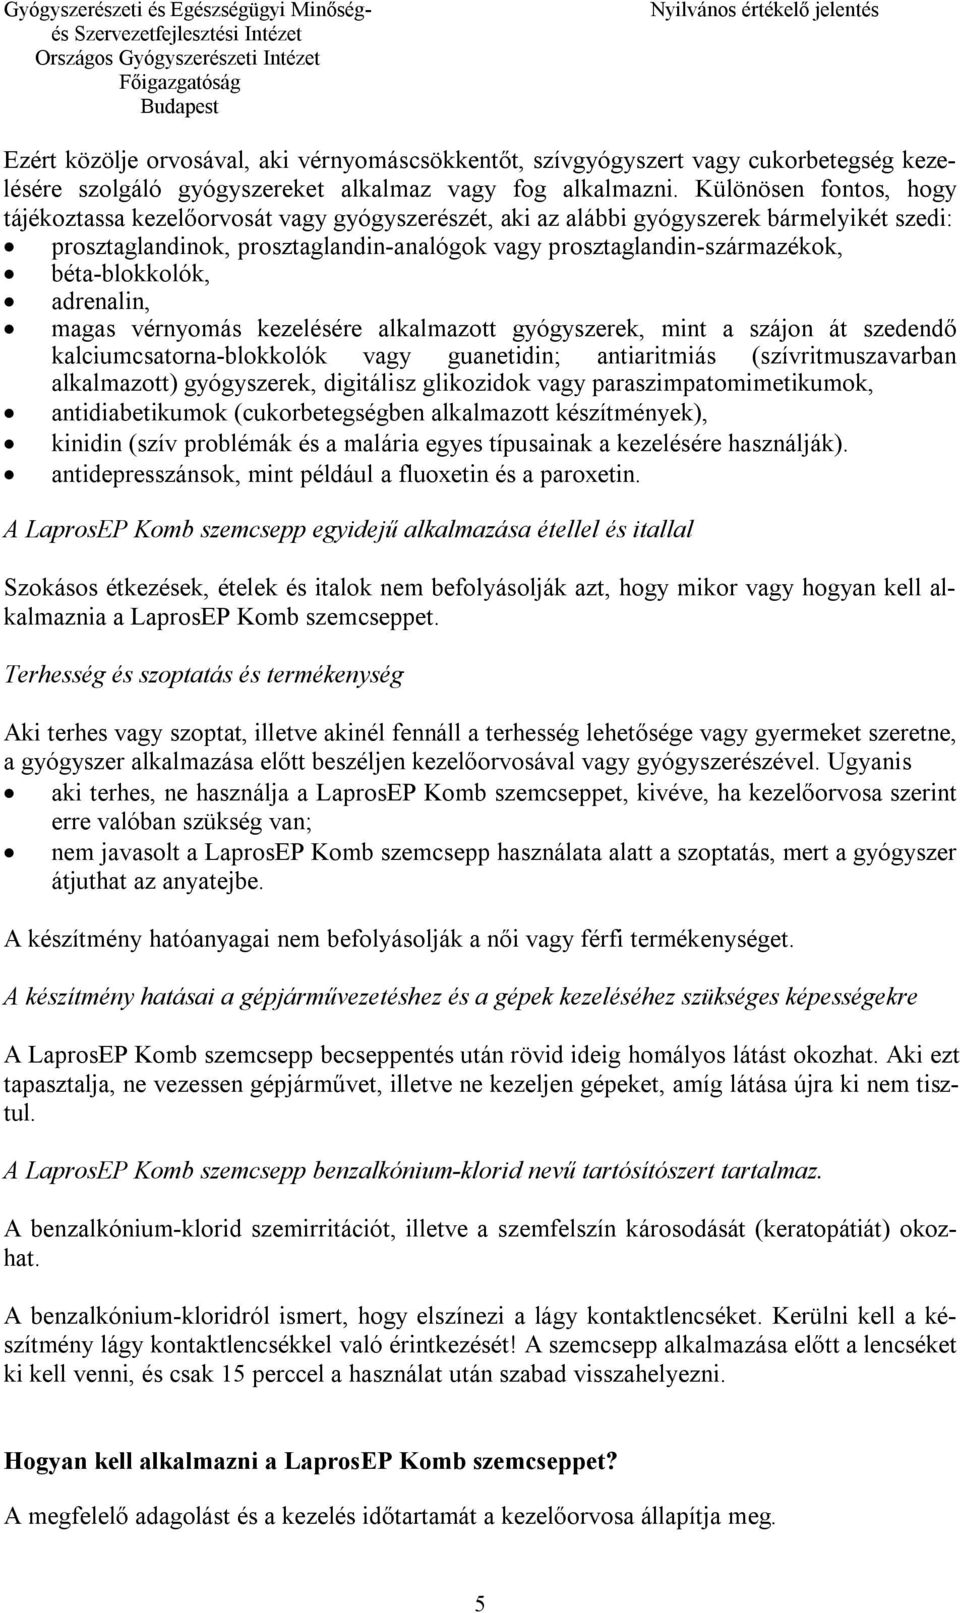 LaprosEP Komb. 0,05 mg/ml + 5 mg/ml oldatos szemcsepp - PDF Free Download